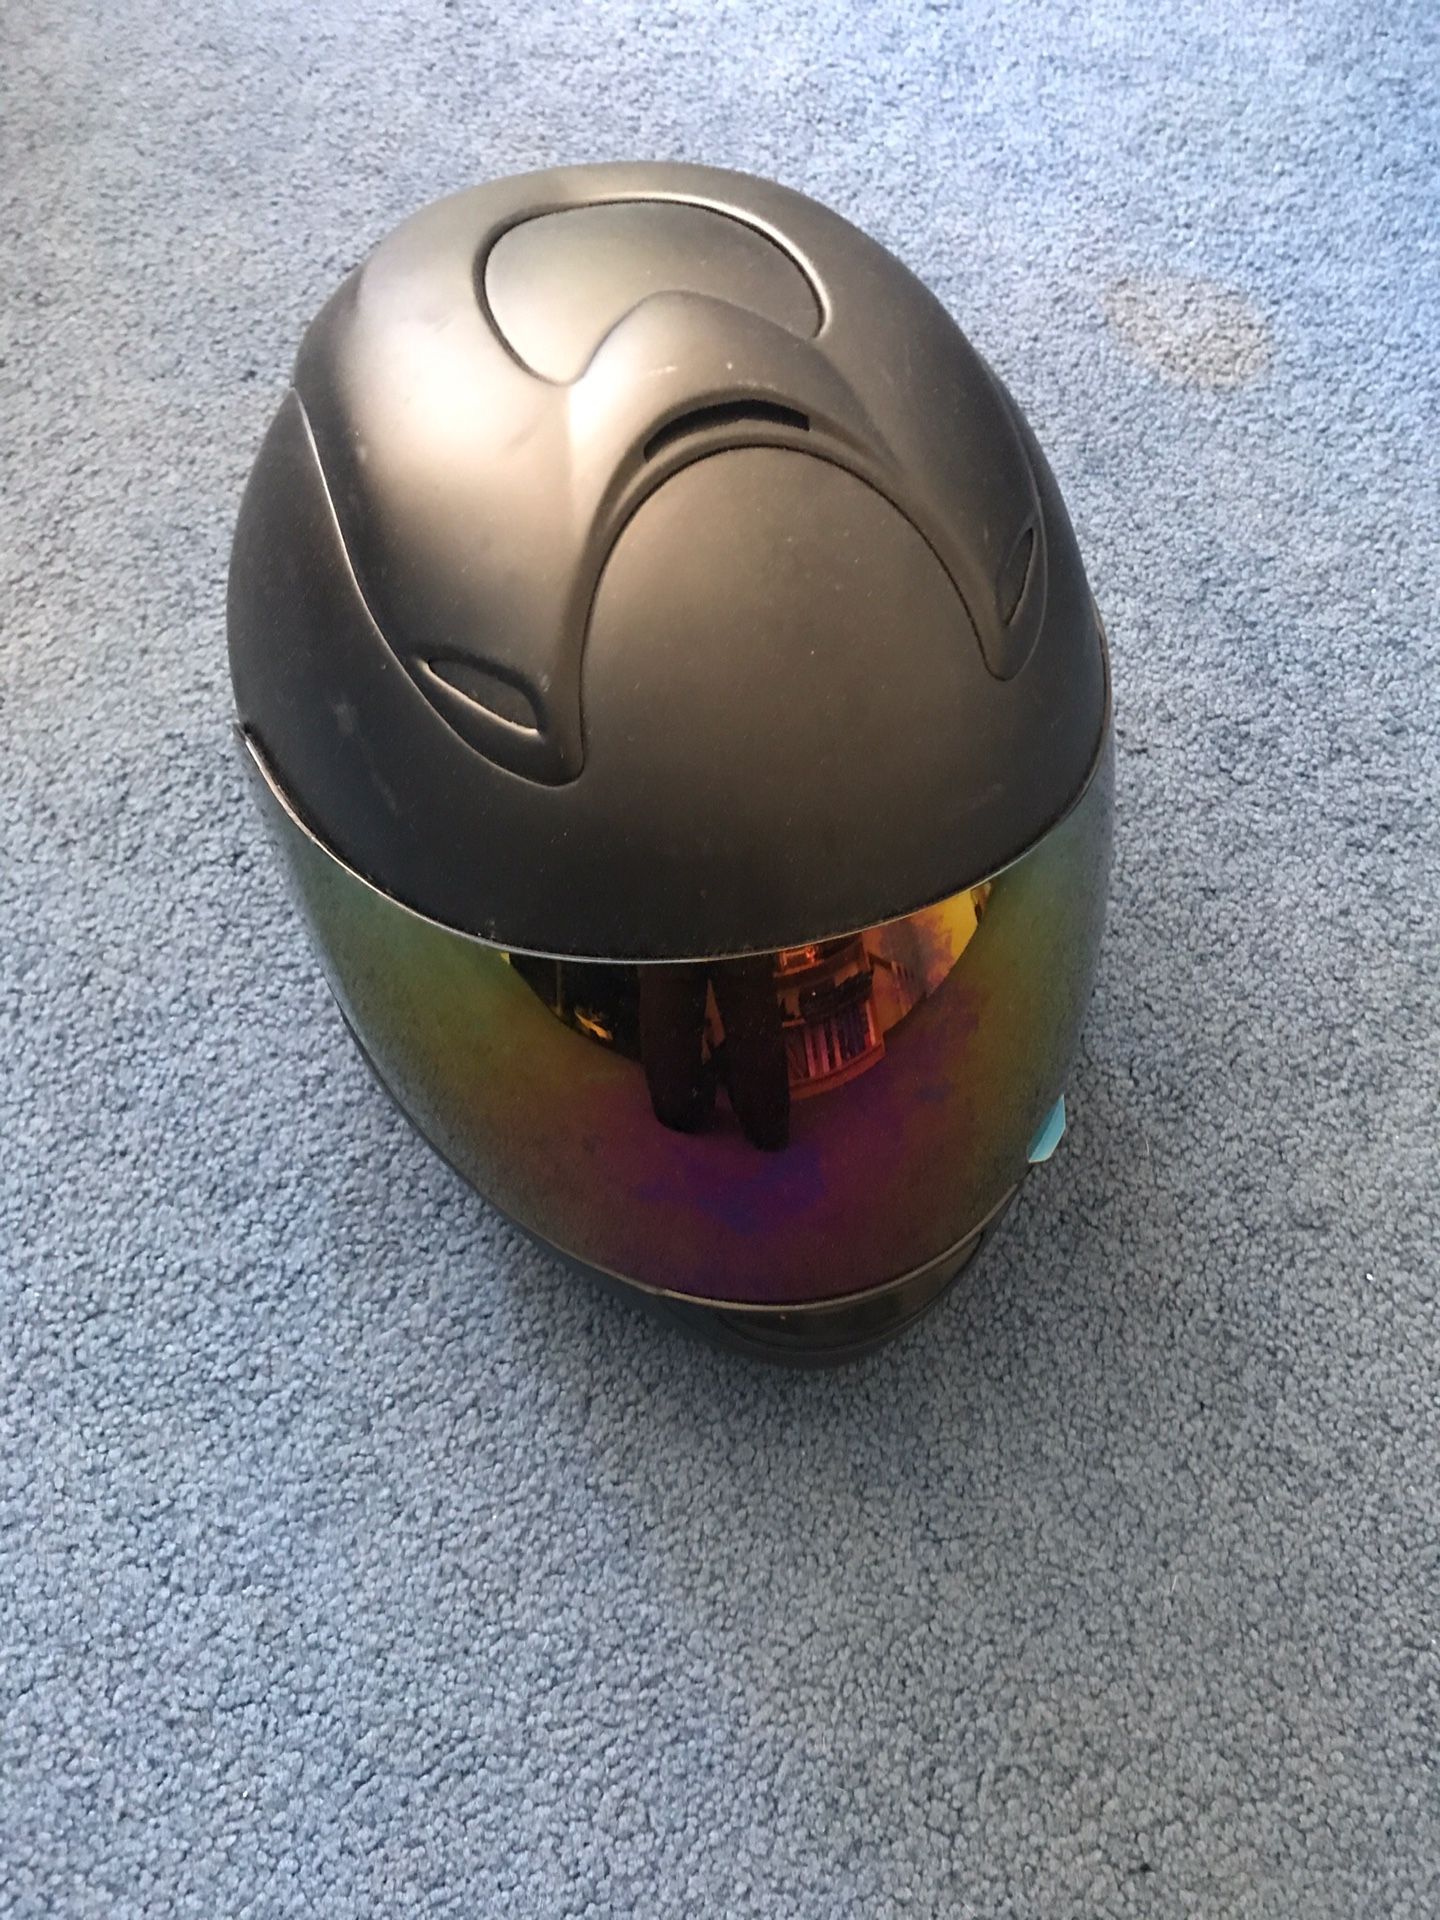 Motorcycle Helmet with Rainbow Visor Size Medium $20